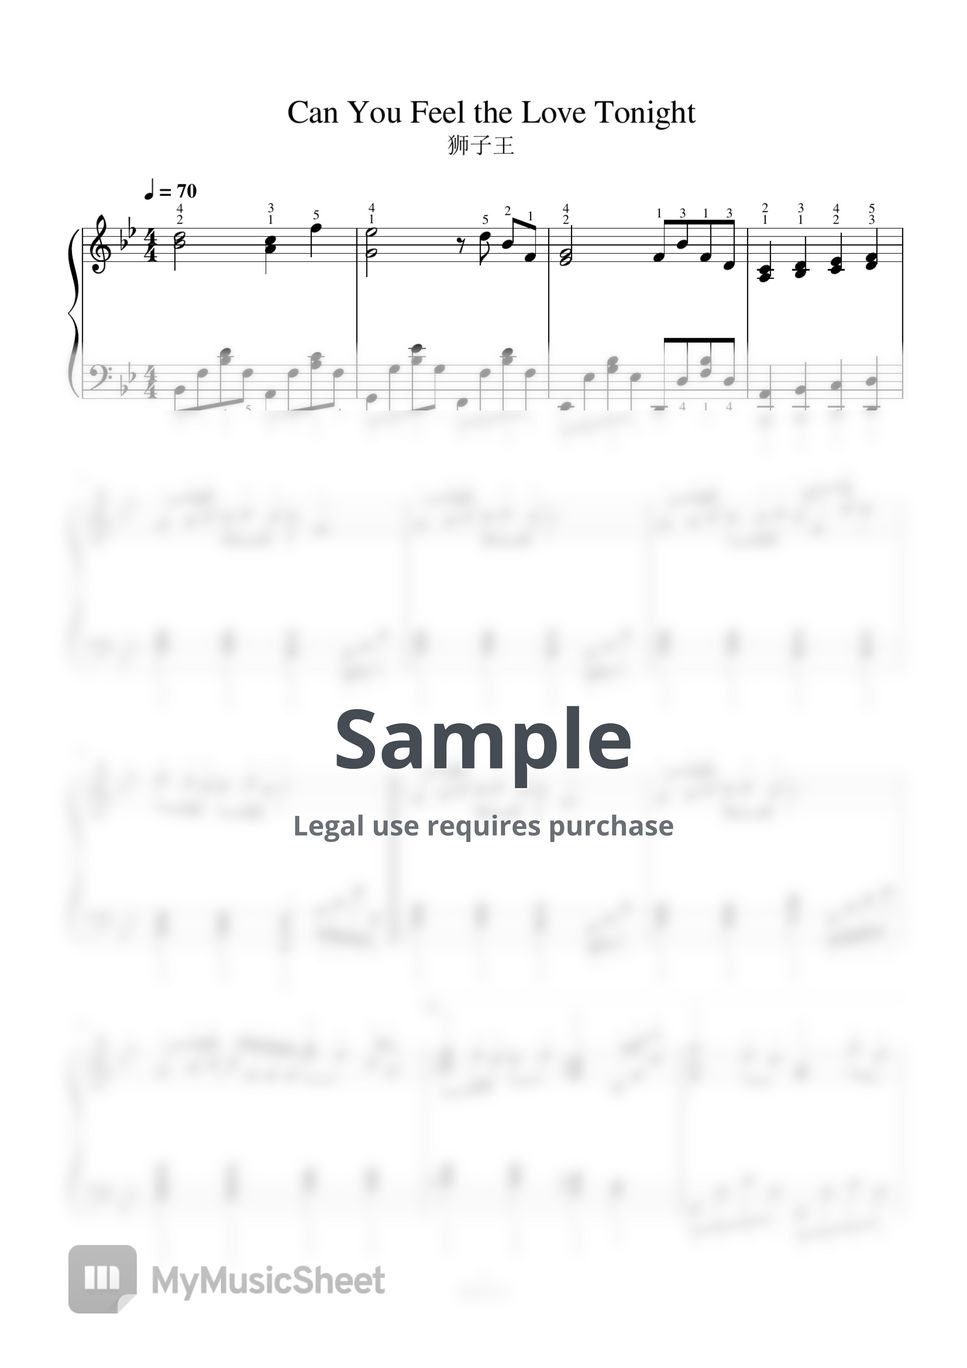 Upendi - 狮子王-全指法钢琴谱高清正版完整版 (Full Fingering Piano Score) by 紫韵音乐